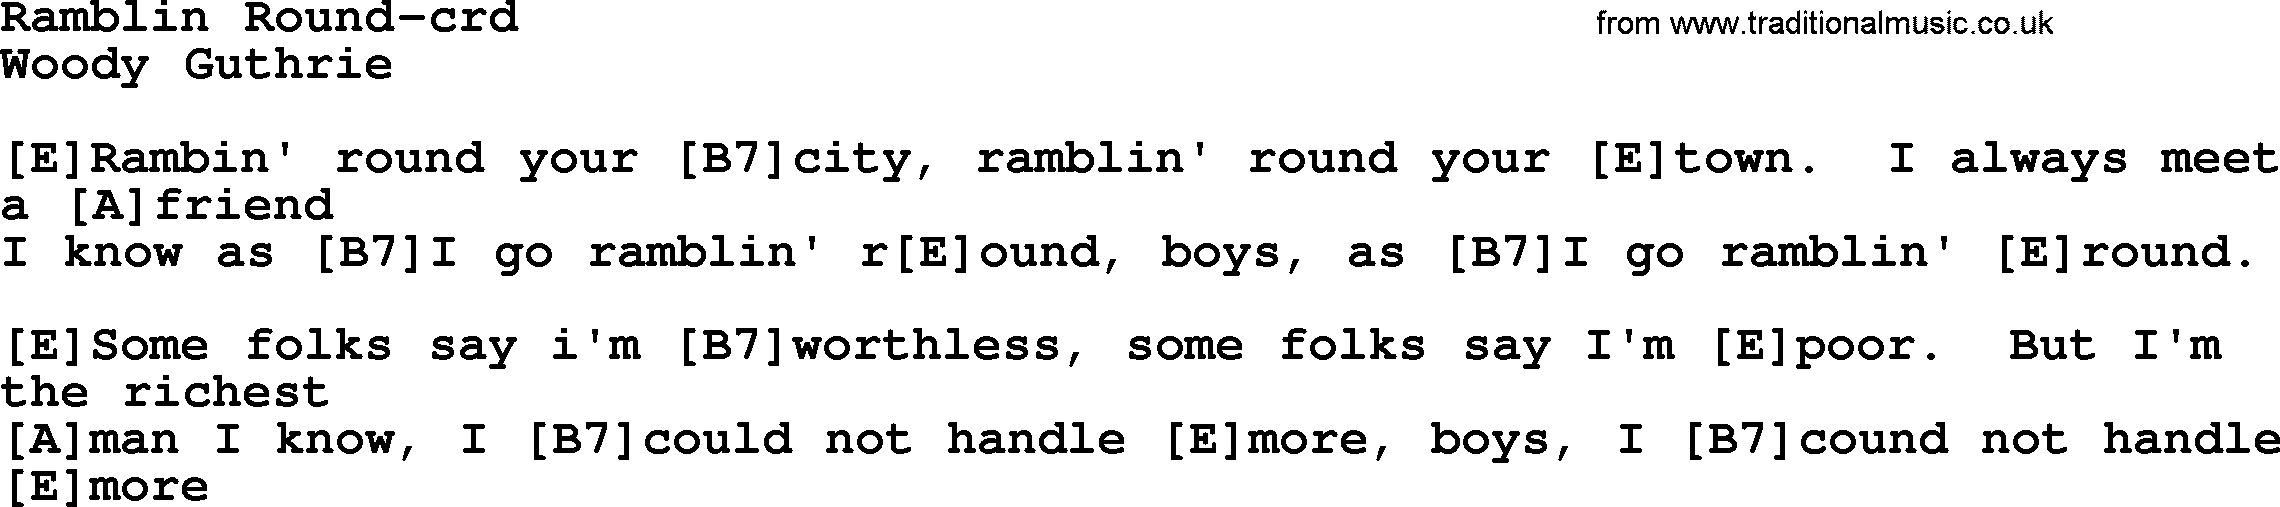 Woody Guthrie song Ramblin Round lyrics and chords